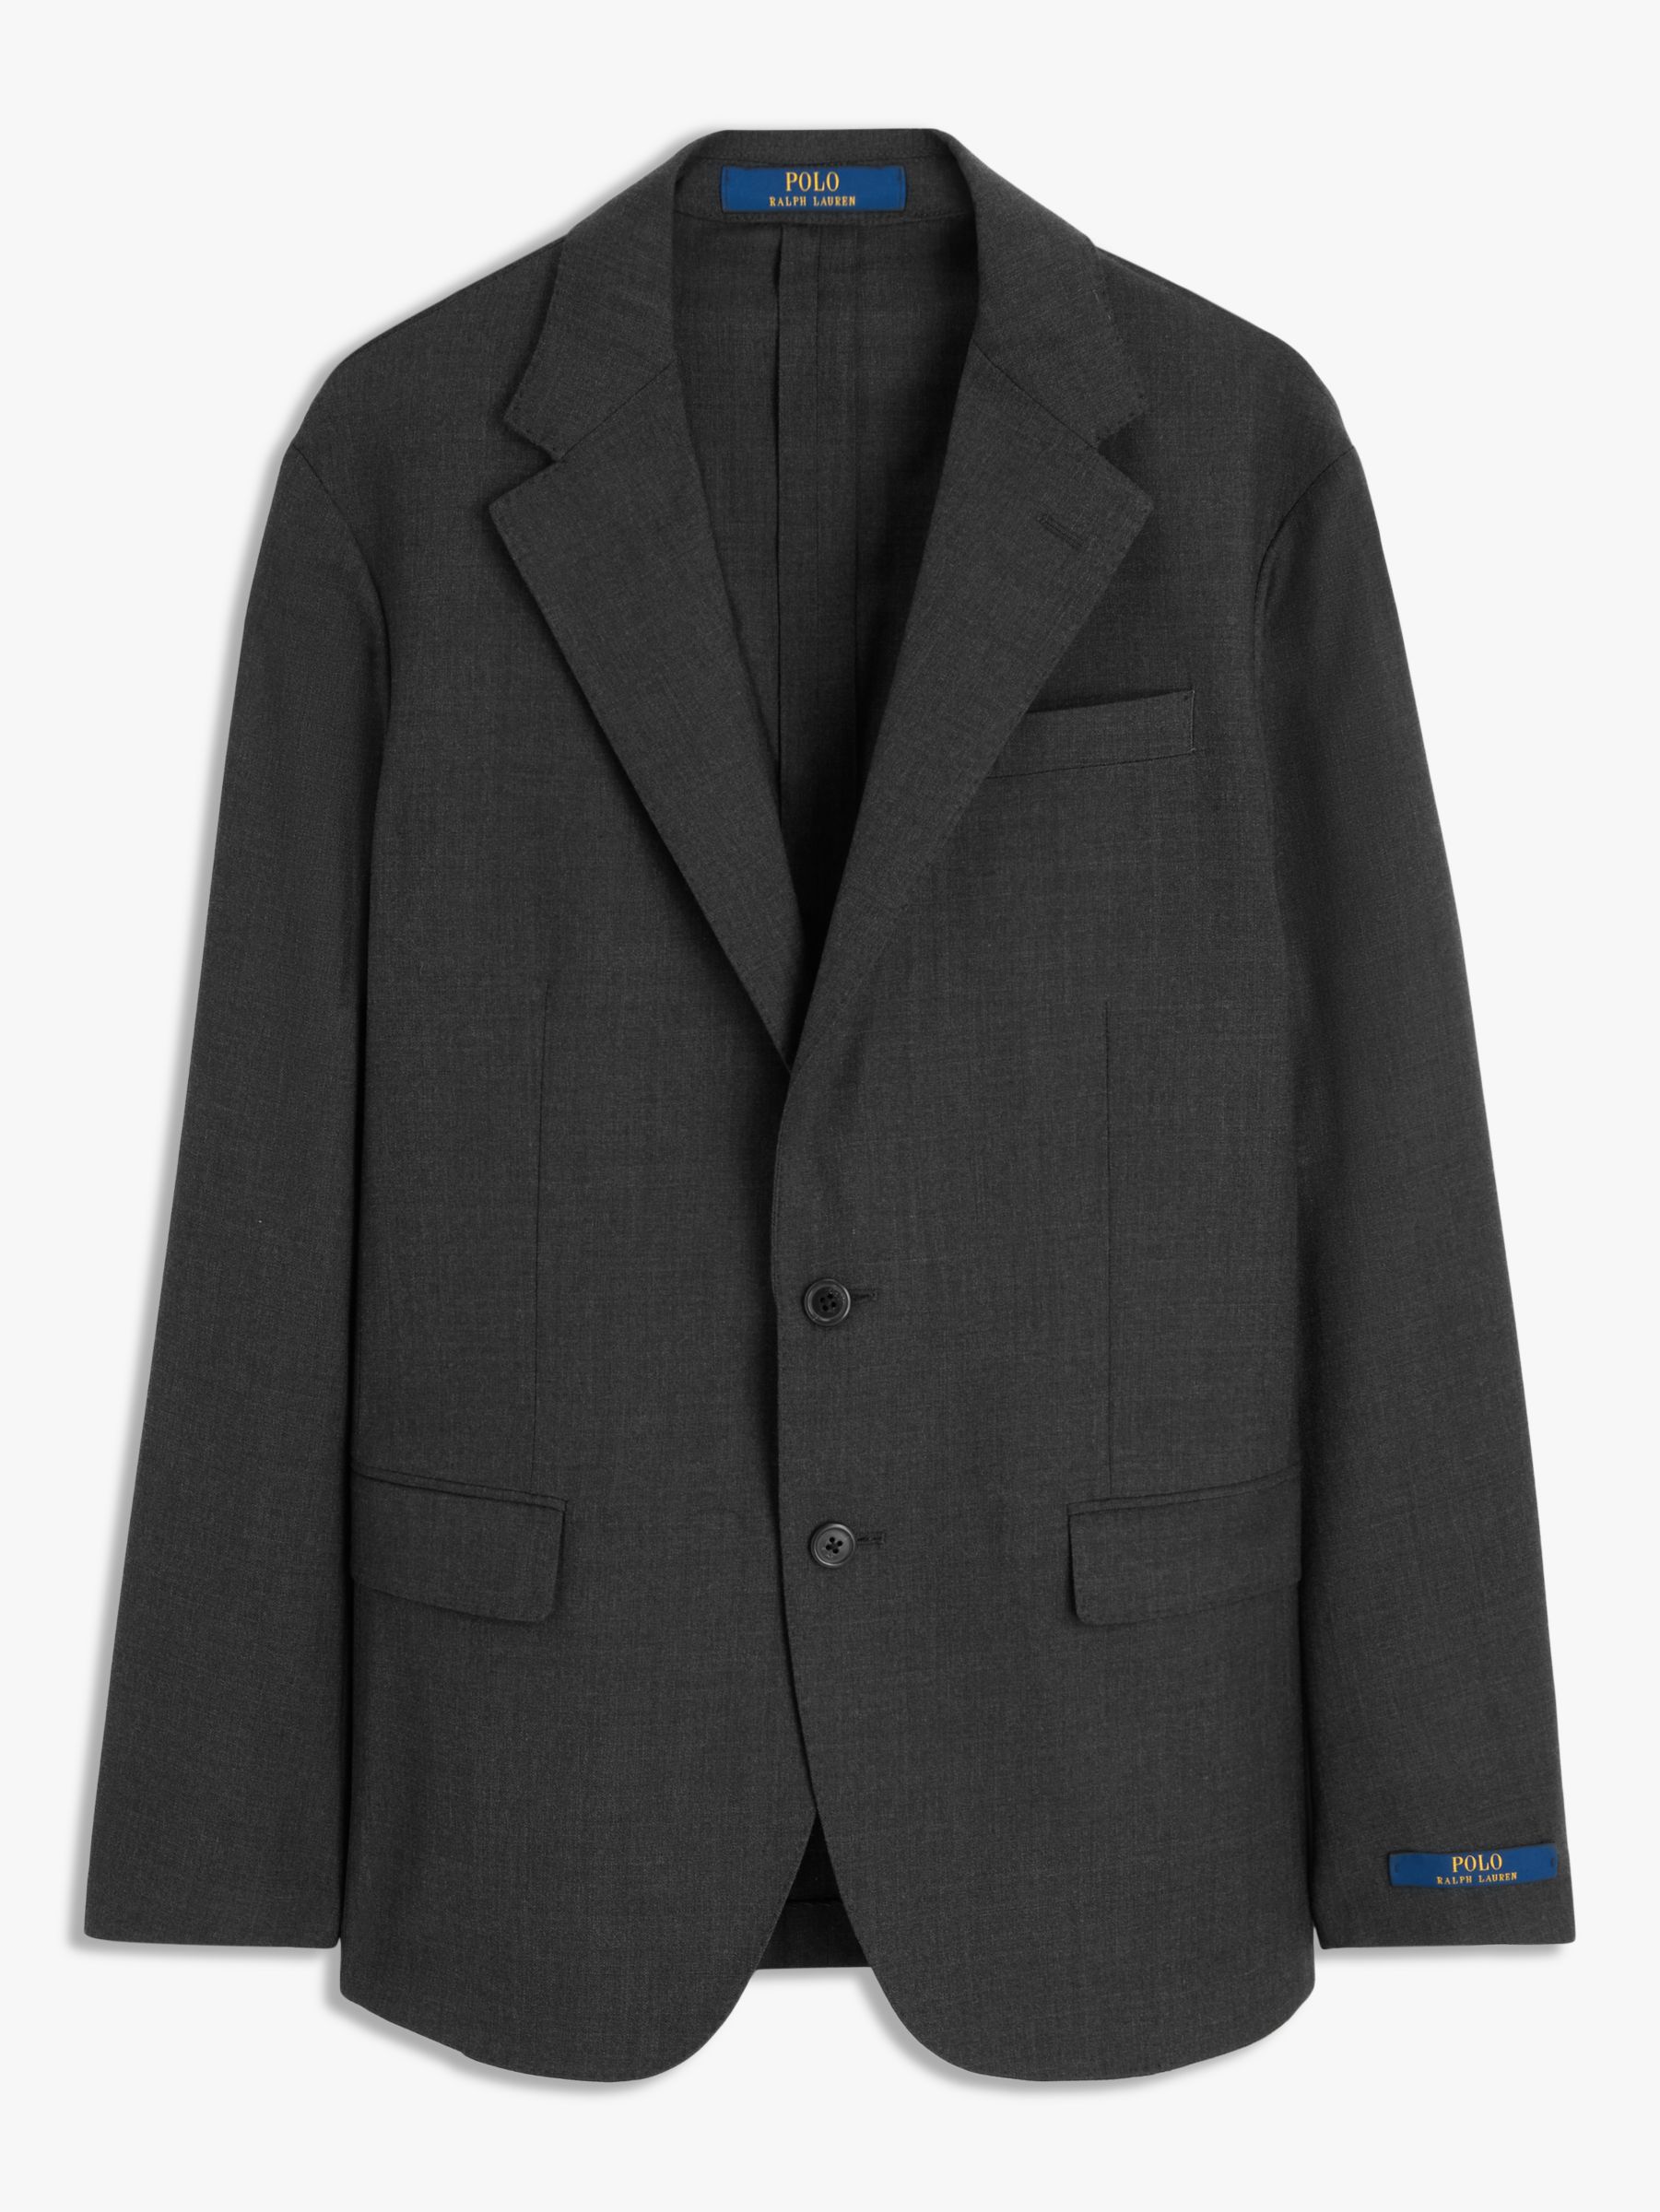 Buy Polo Ralph Lauren Tailored Wool Blazer, Charcoal Online at johnlewis.com